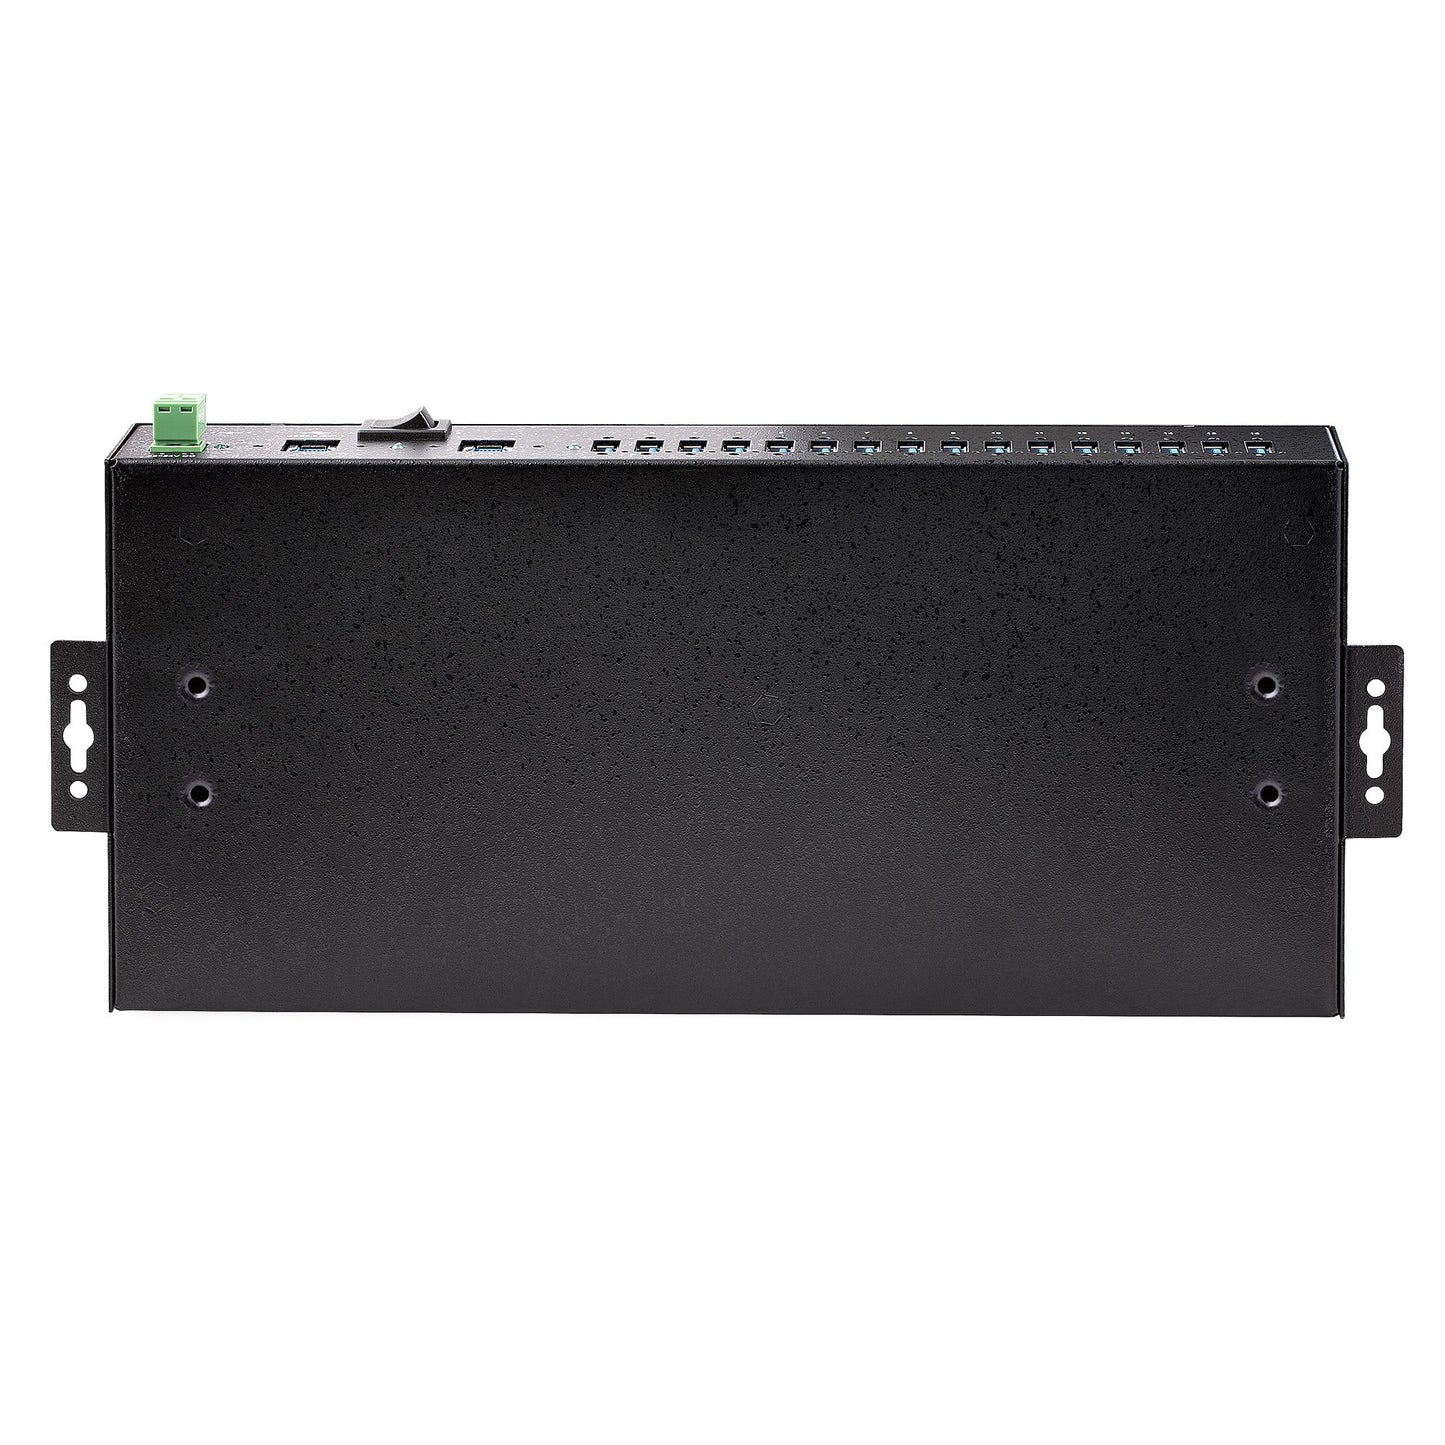 Hub USB 3.0 STARTECH 16 Puertos Industrial - Montaje en Rack/Superficie/DIN - Carga Compartida 120W, color negro